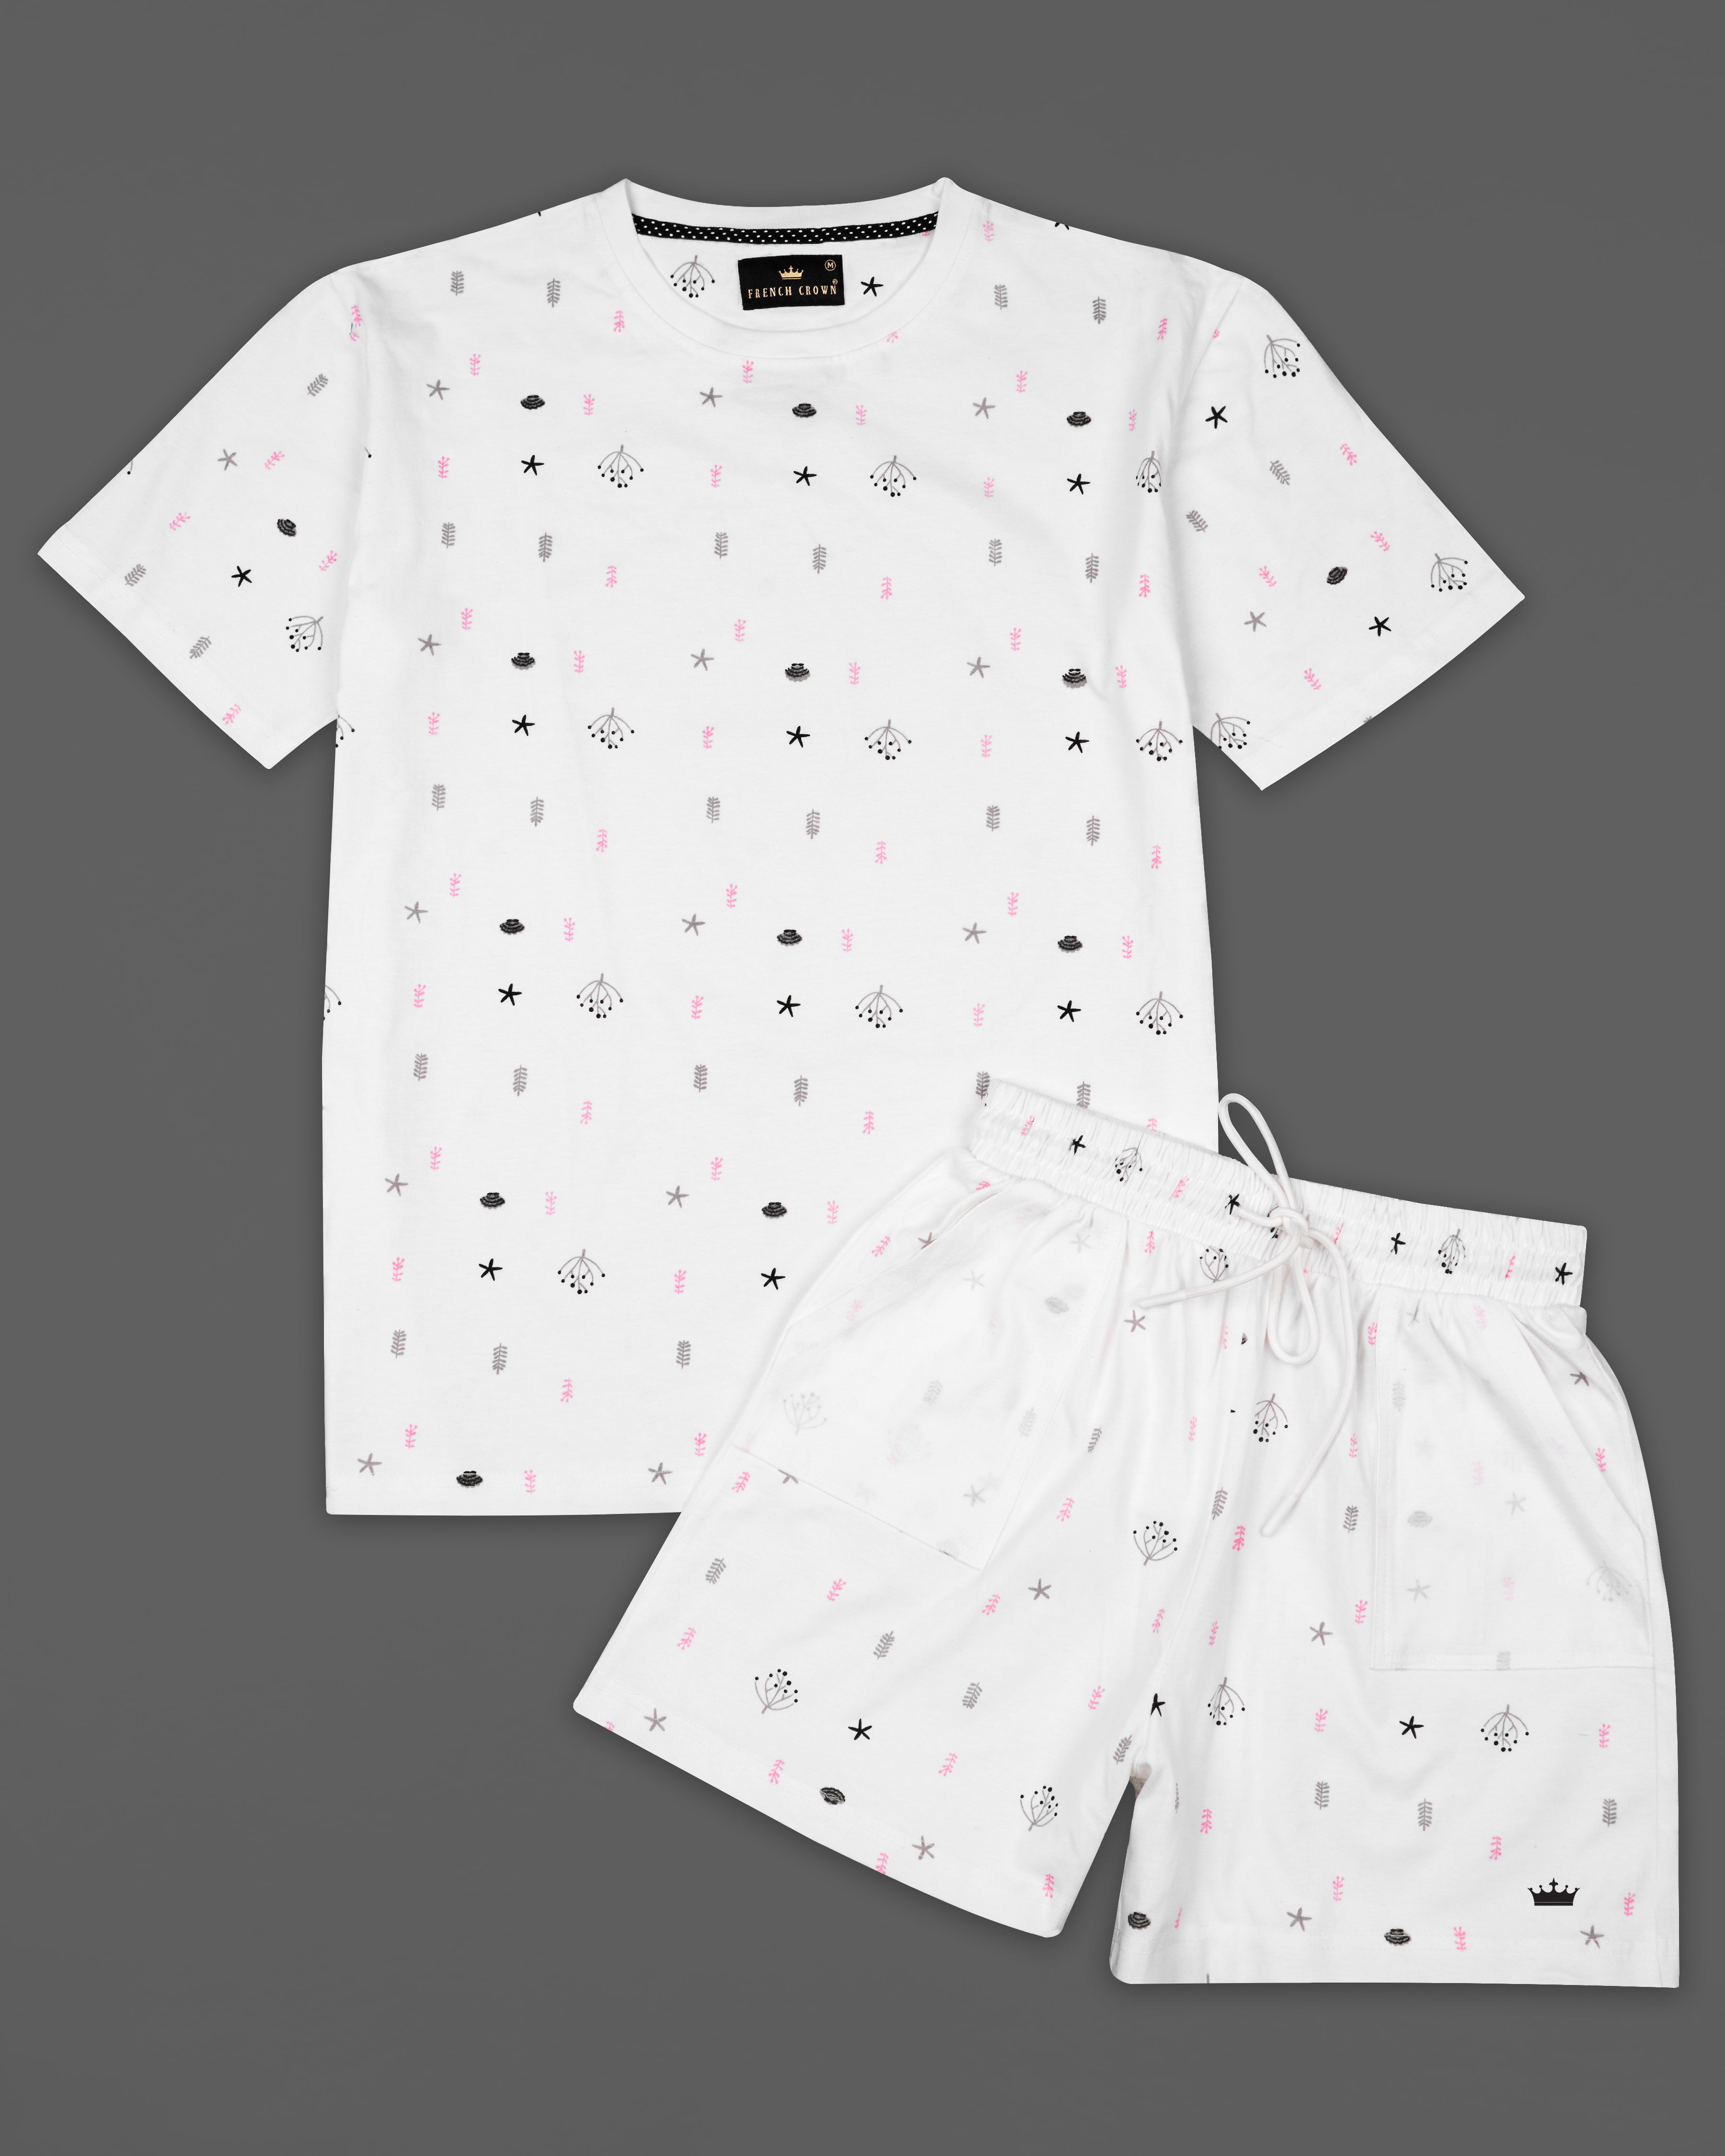 Bright White Printed Organic Cotton T-shirt with Premium Cotton Shorts Combo TS661-SR175-S, TS661-SR175-M, TS661-SR175-L, TS661-SR175-XL, TS661-SR175-XXL